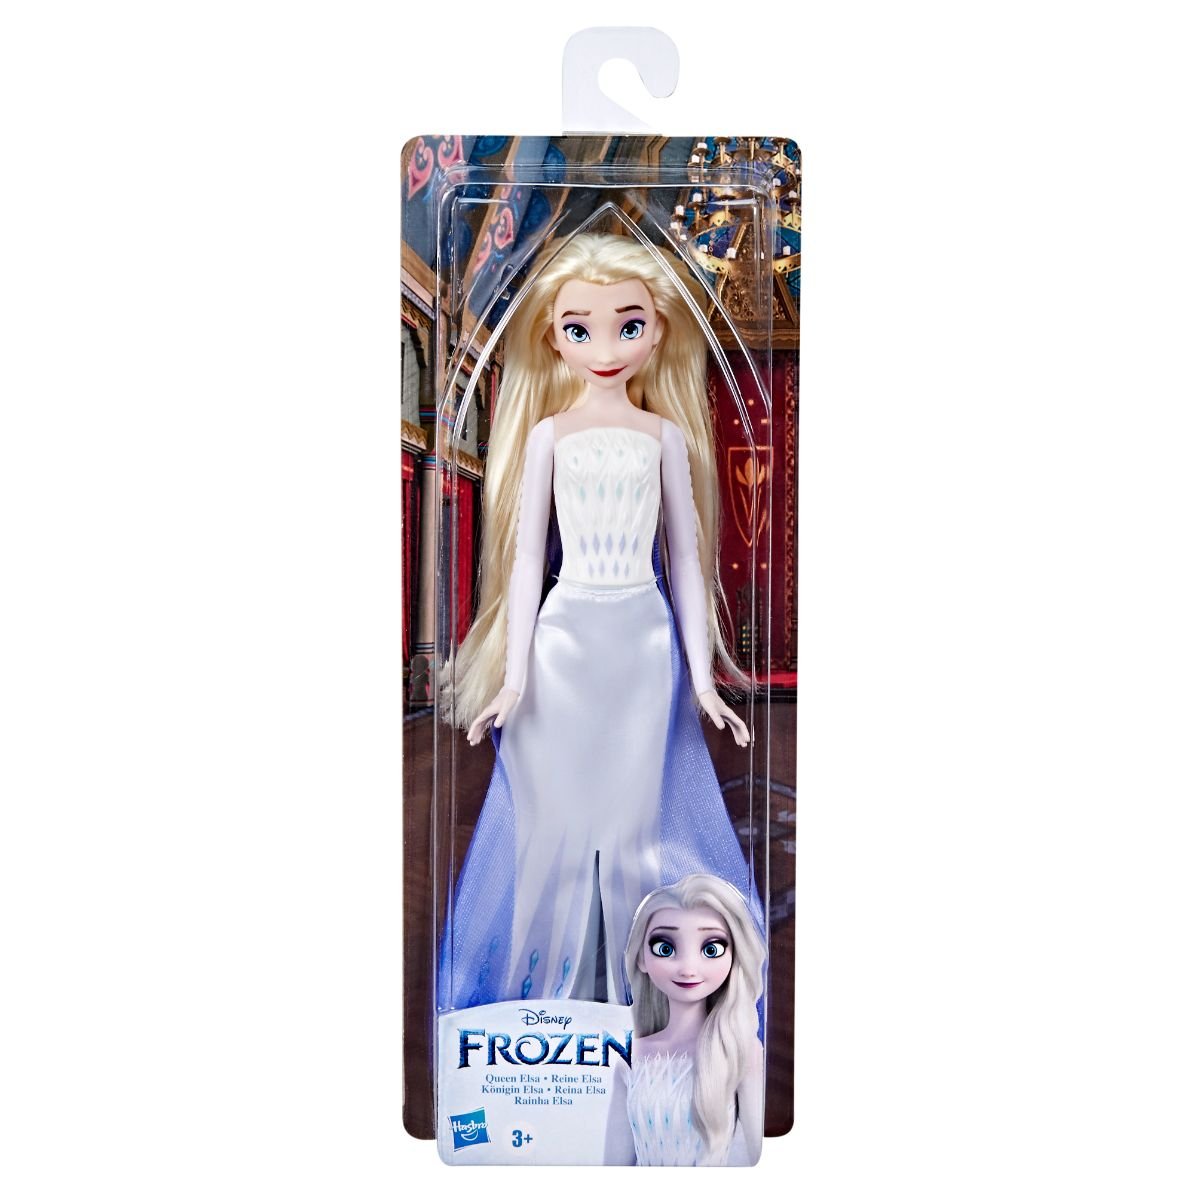 Papusa Frozen 2, Shimmer Elsa Disney Frozen 2